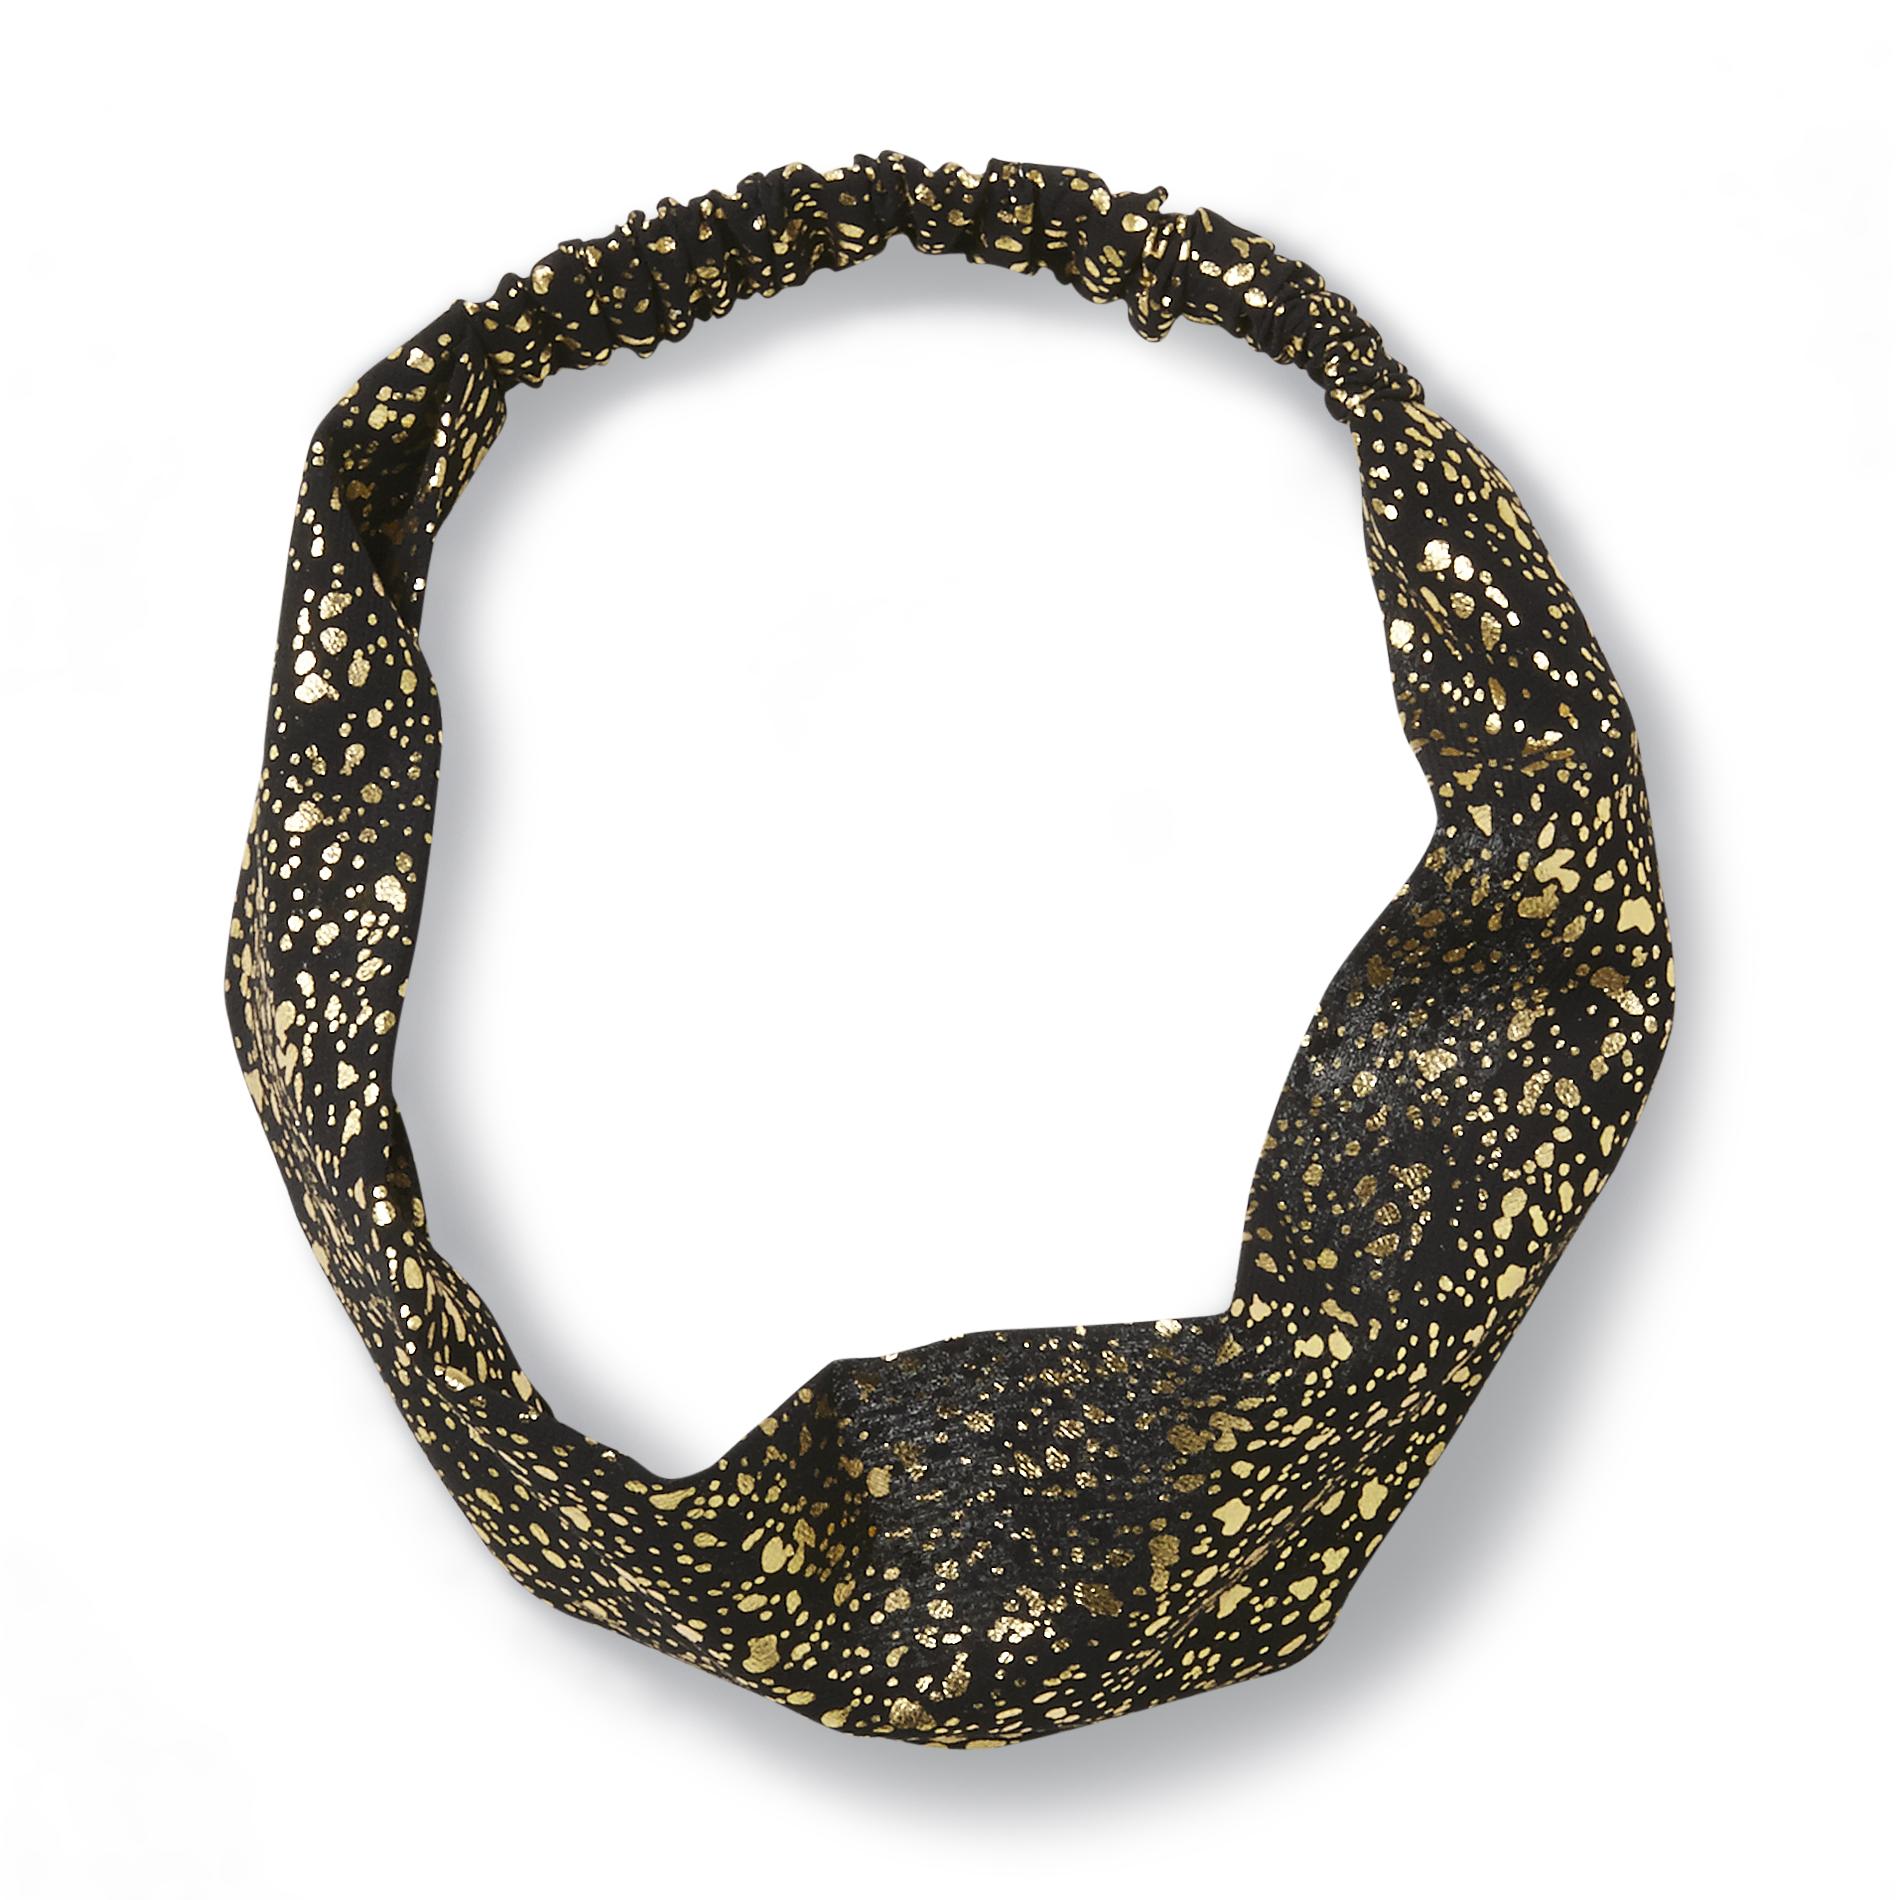 Joe Boxer Women's Headband - Gold Speckled